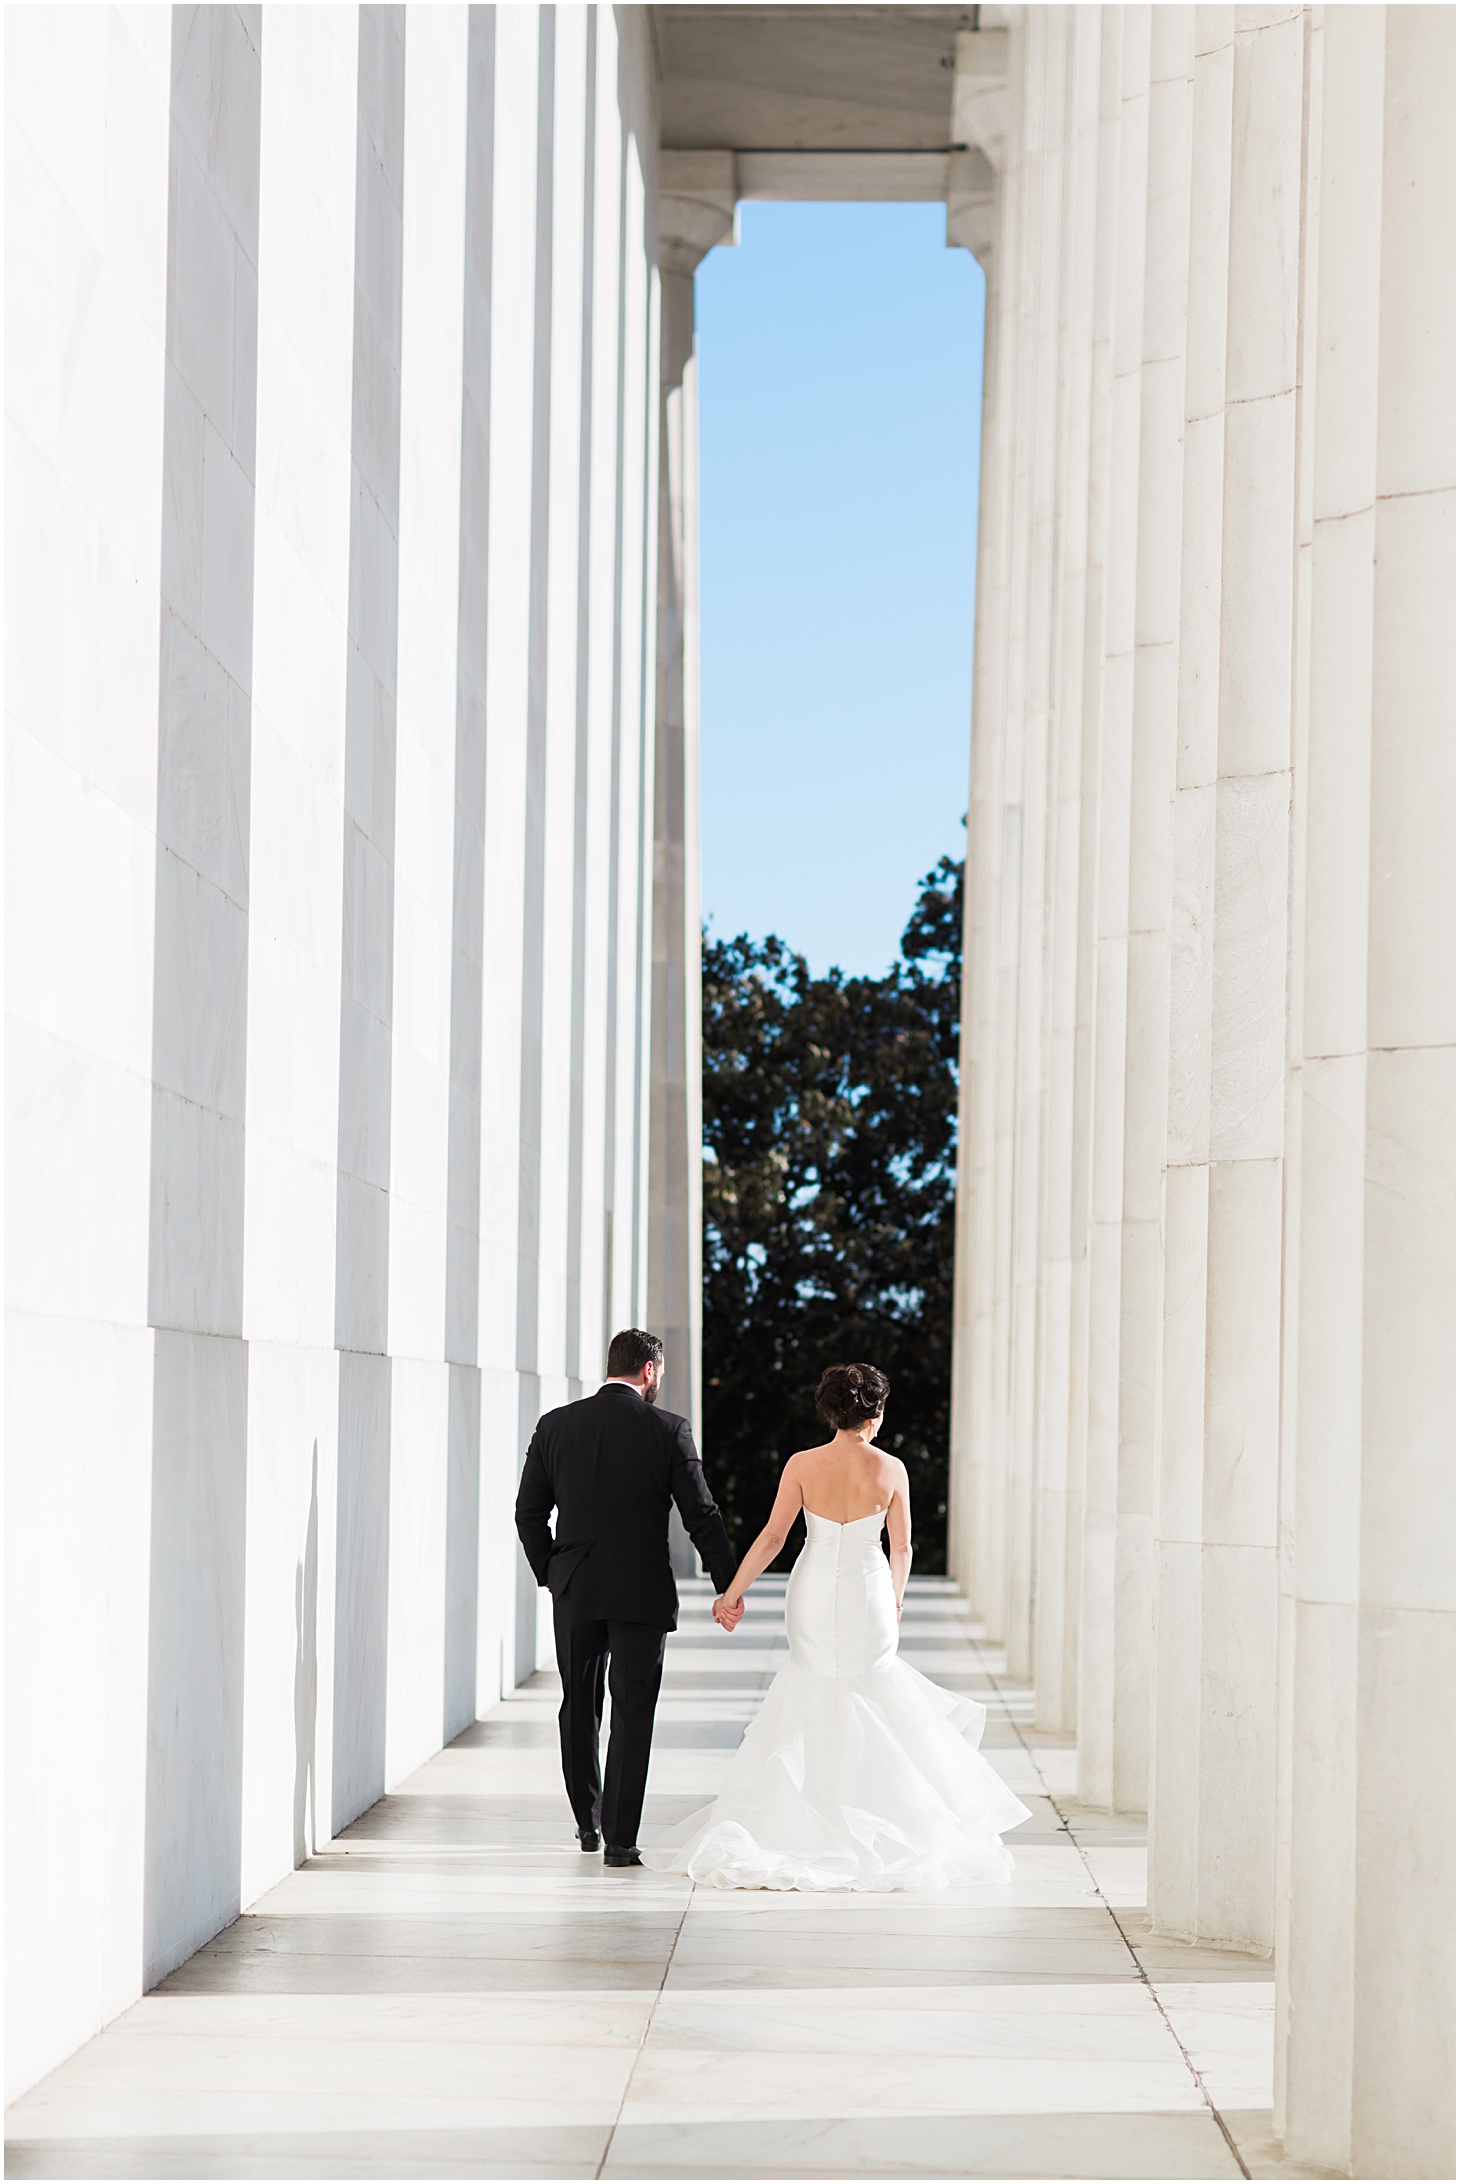 Lincoln Memorial Wedding Portraits | Top Washington DC wedding photographer Sarah Bradshaw